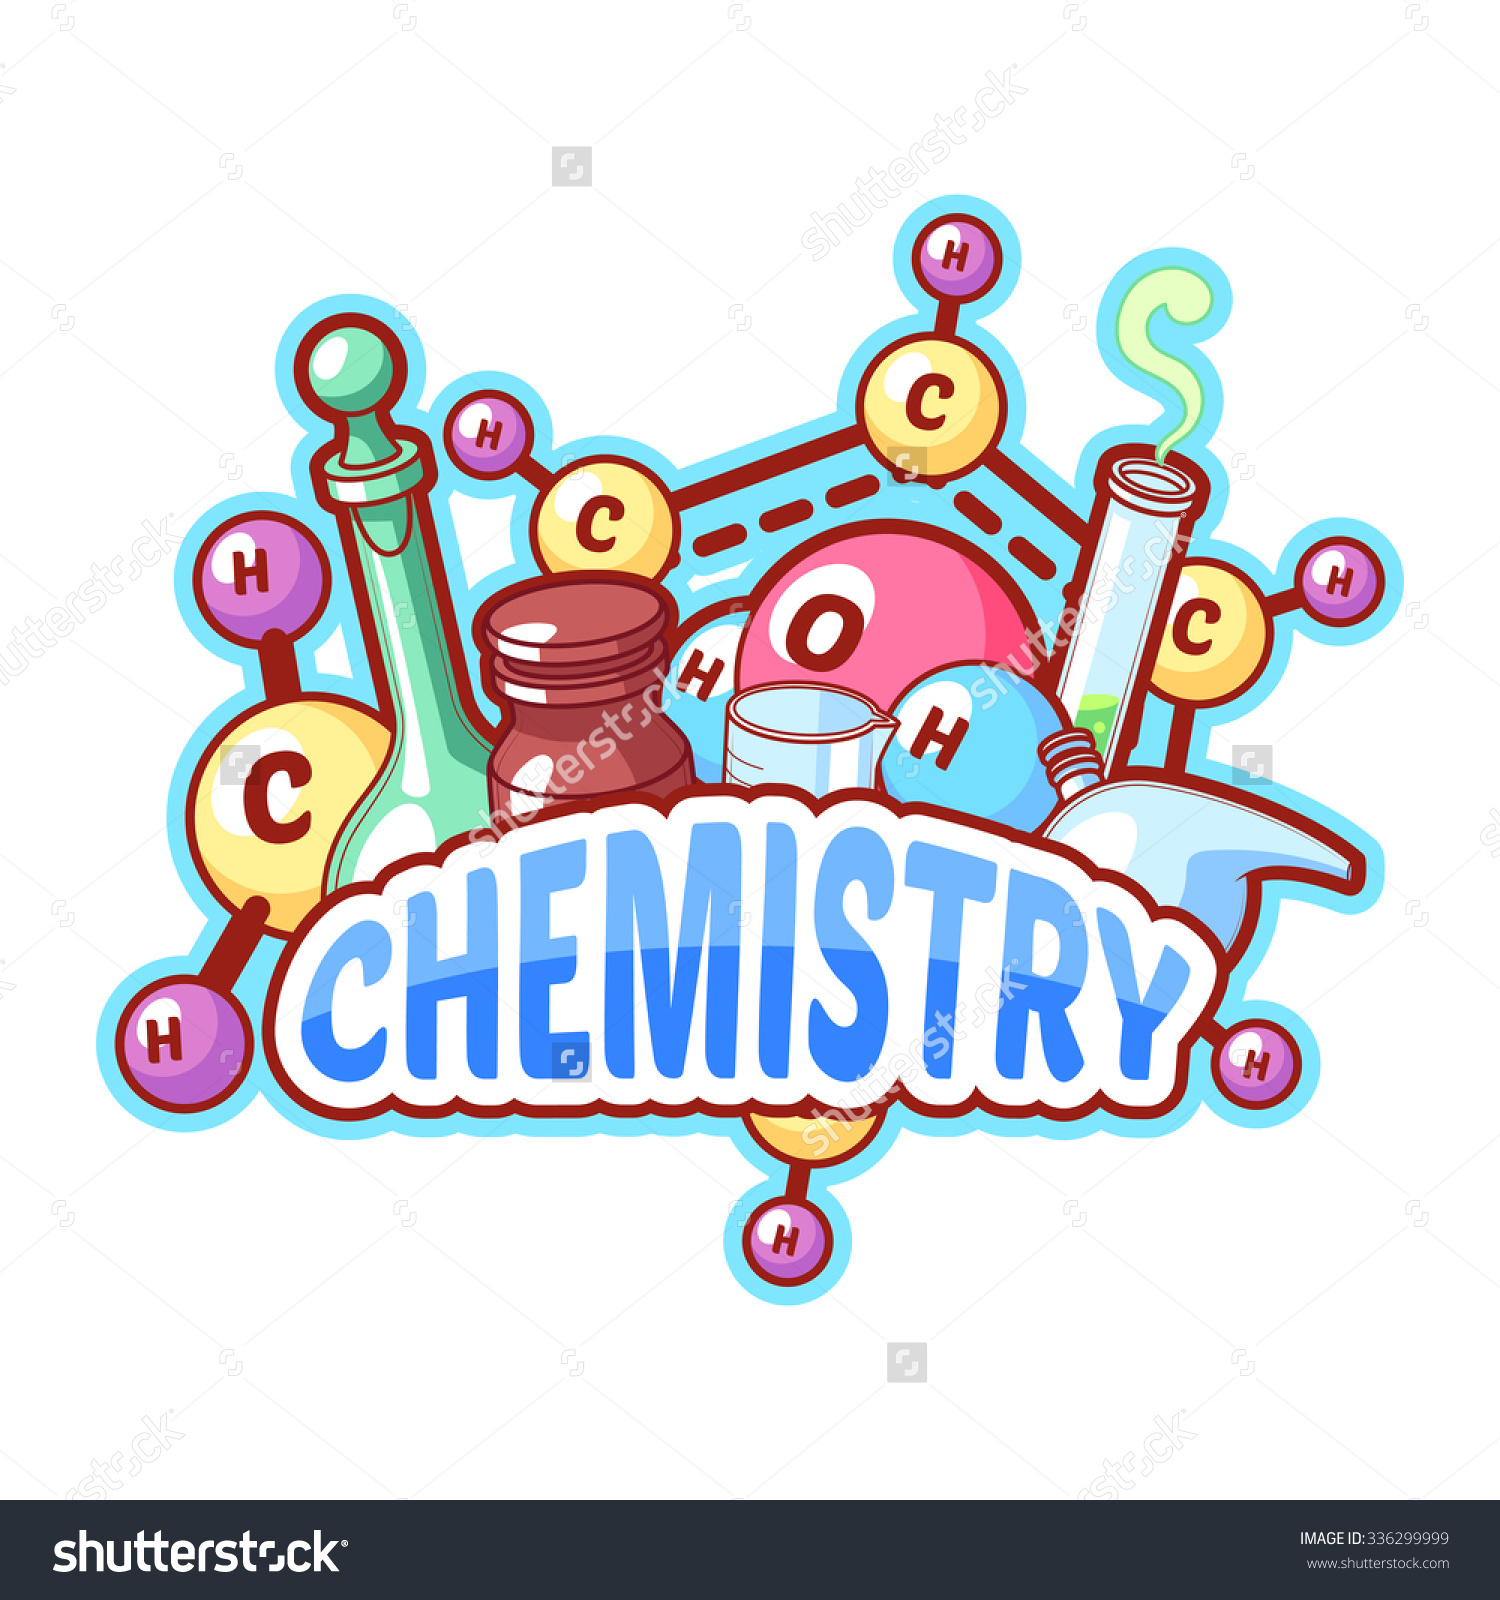 Chemistry clipart logo.